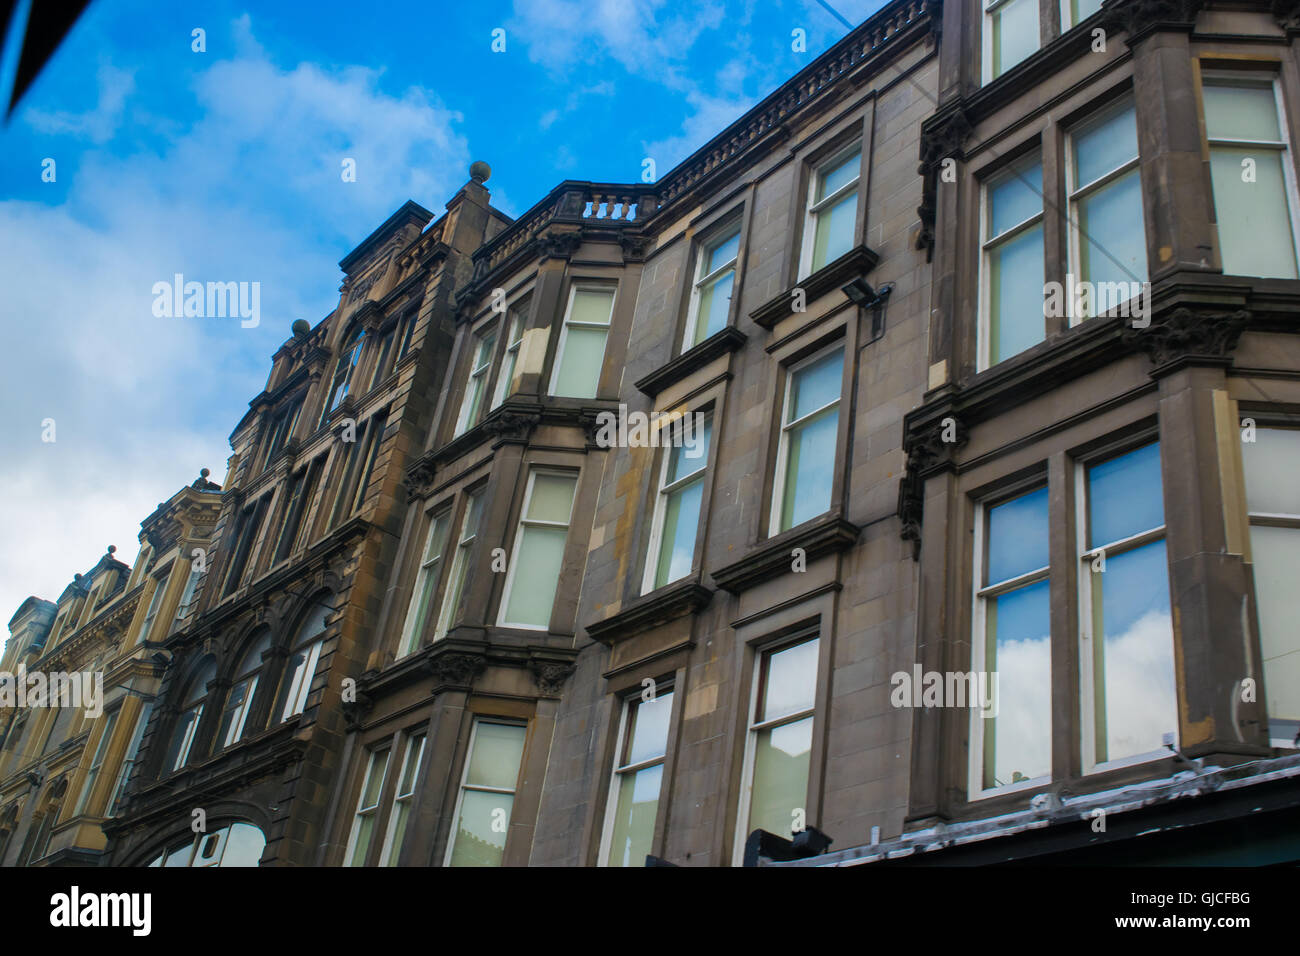 Architectural Photos From Around Edinburgh, Scotland. Stock Photo